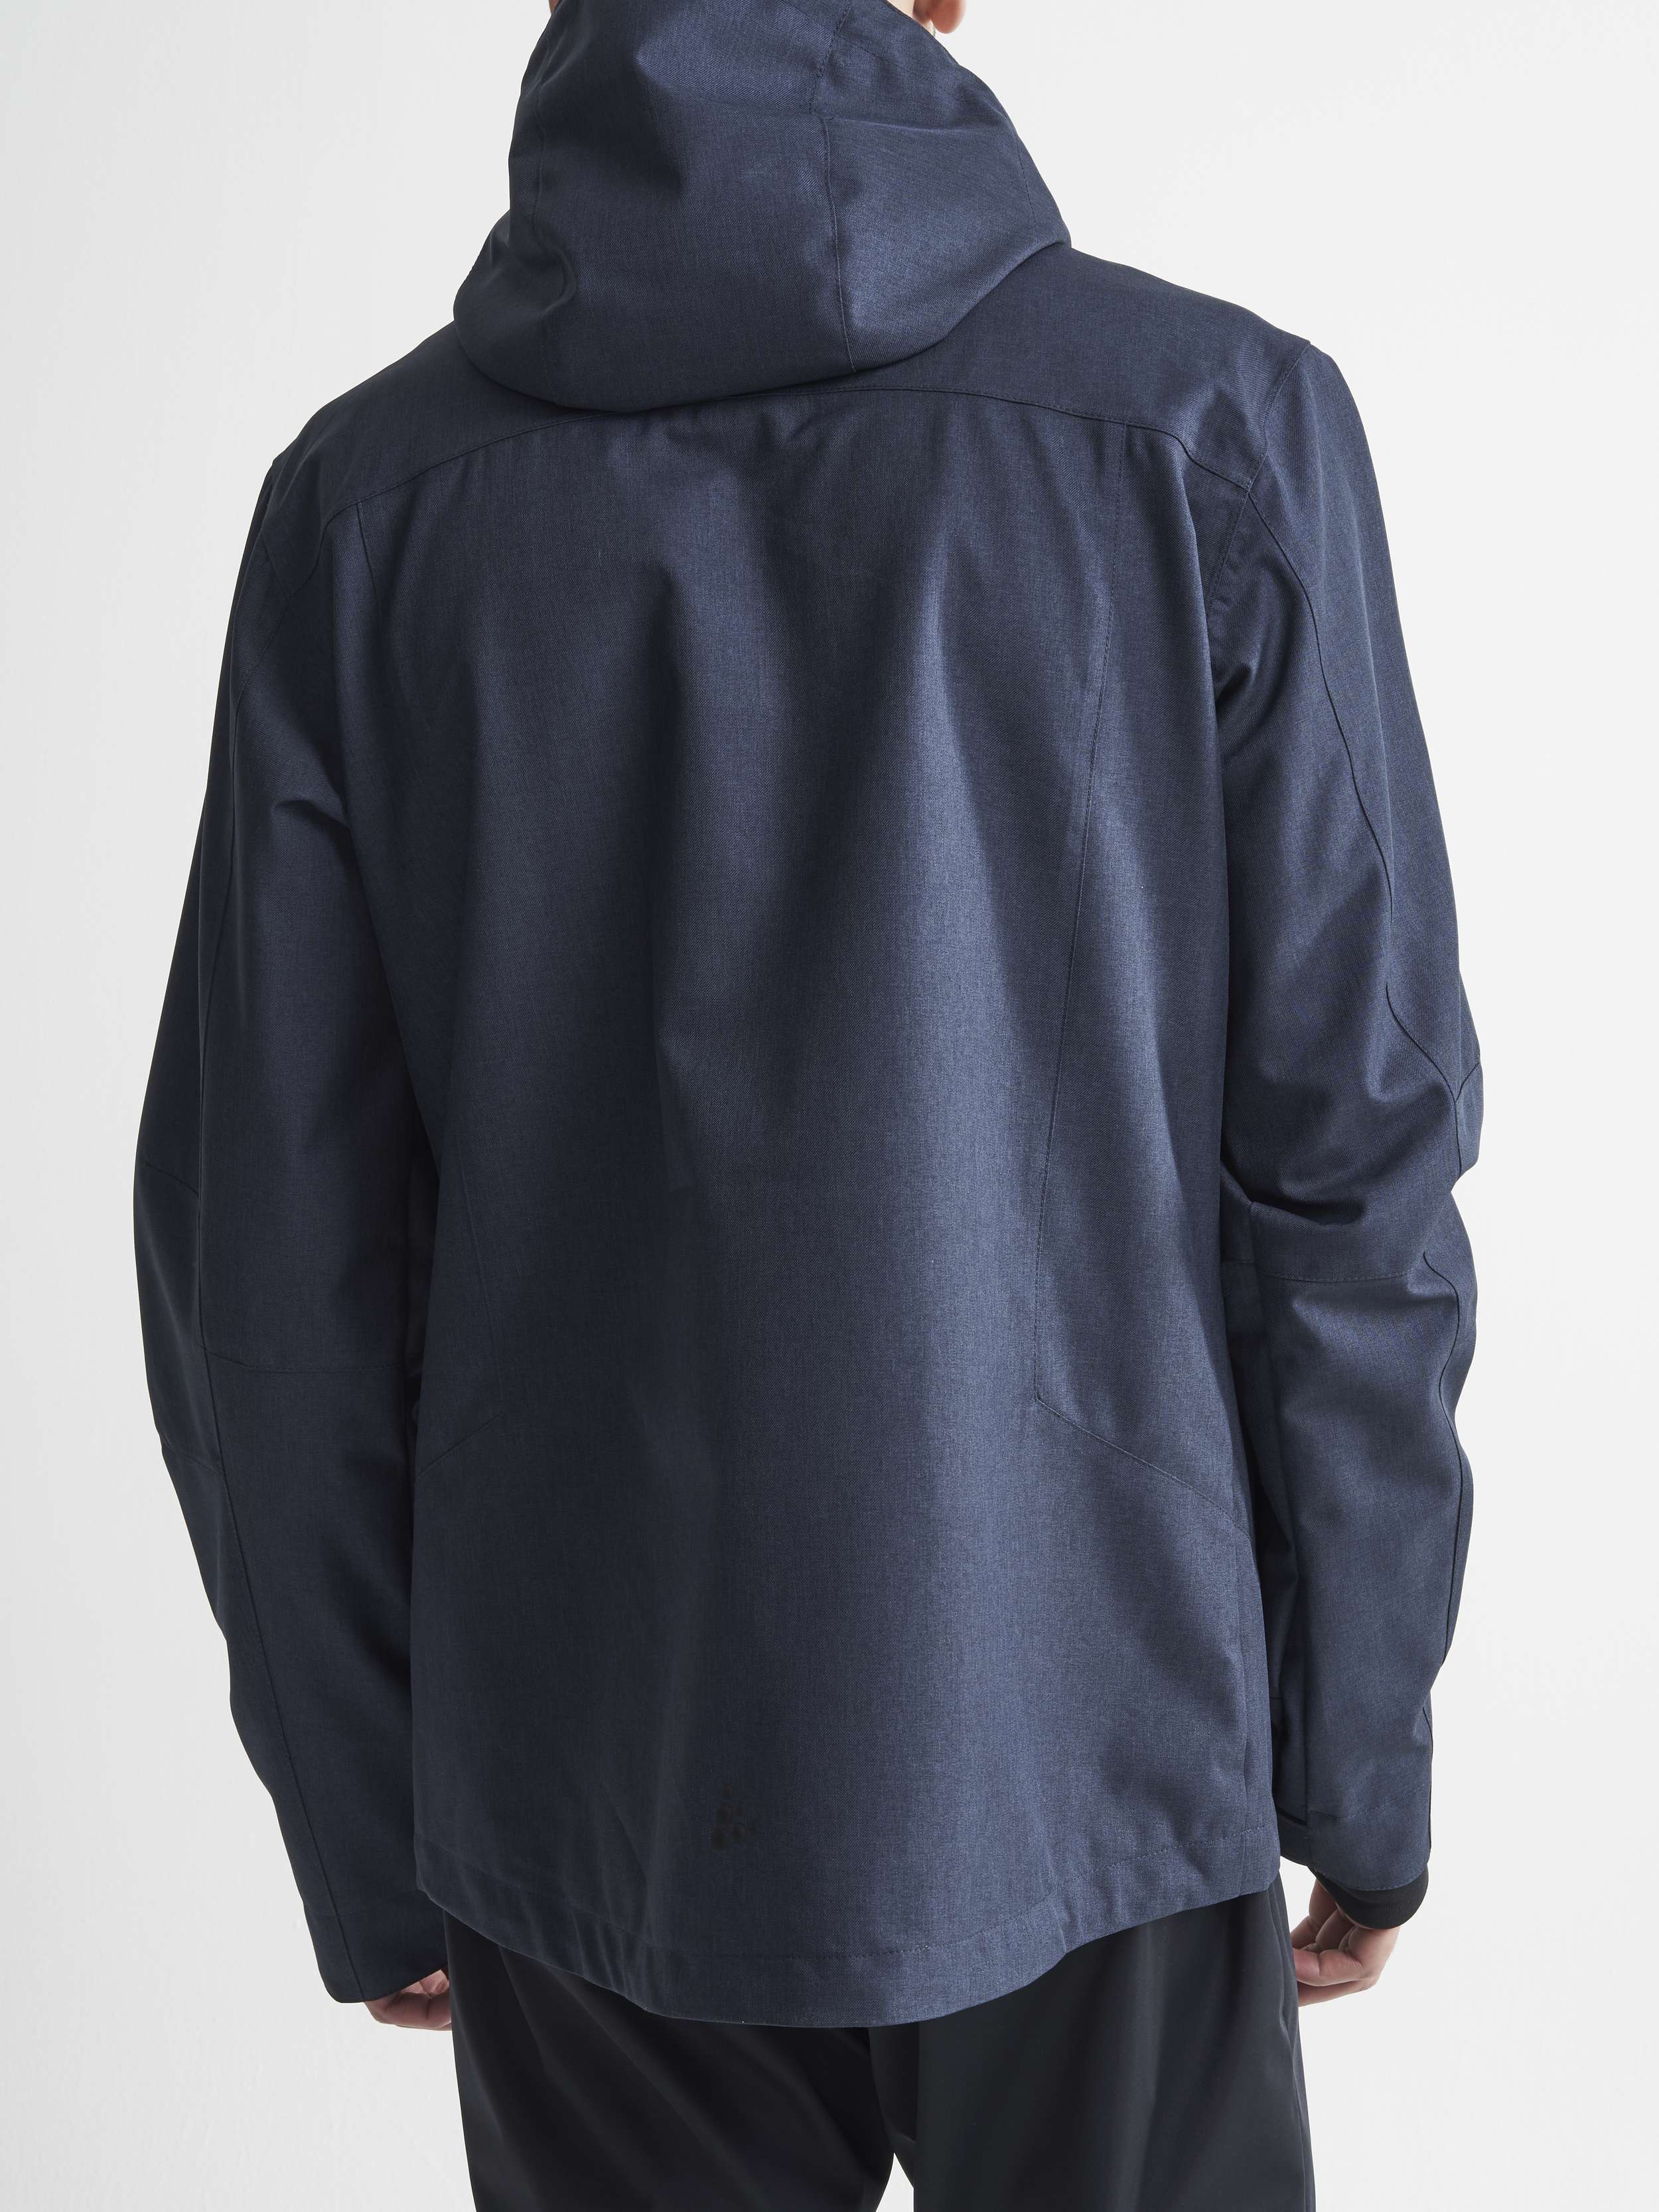 Mountain jacket M - Navy blue | Craft Sportswear